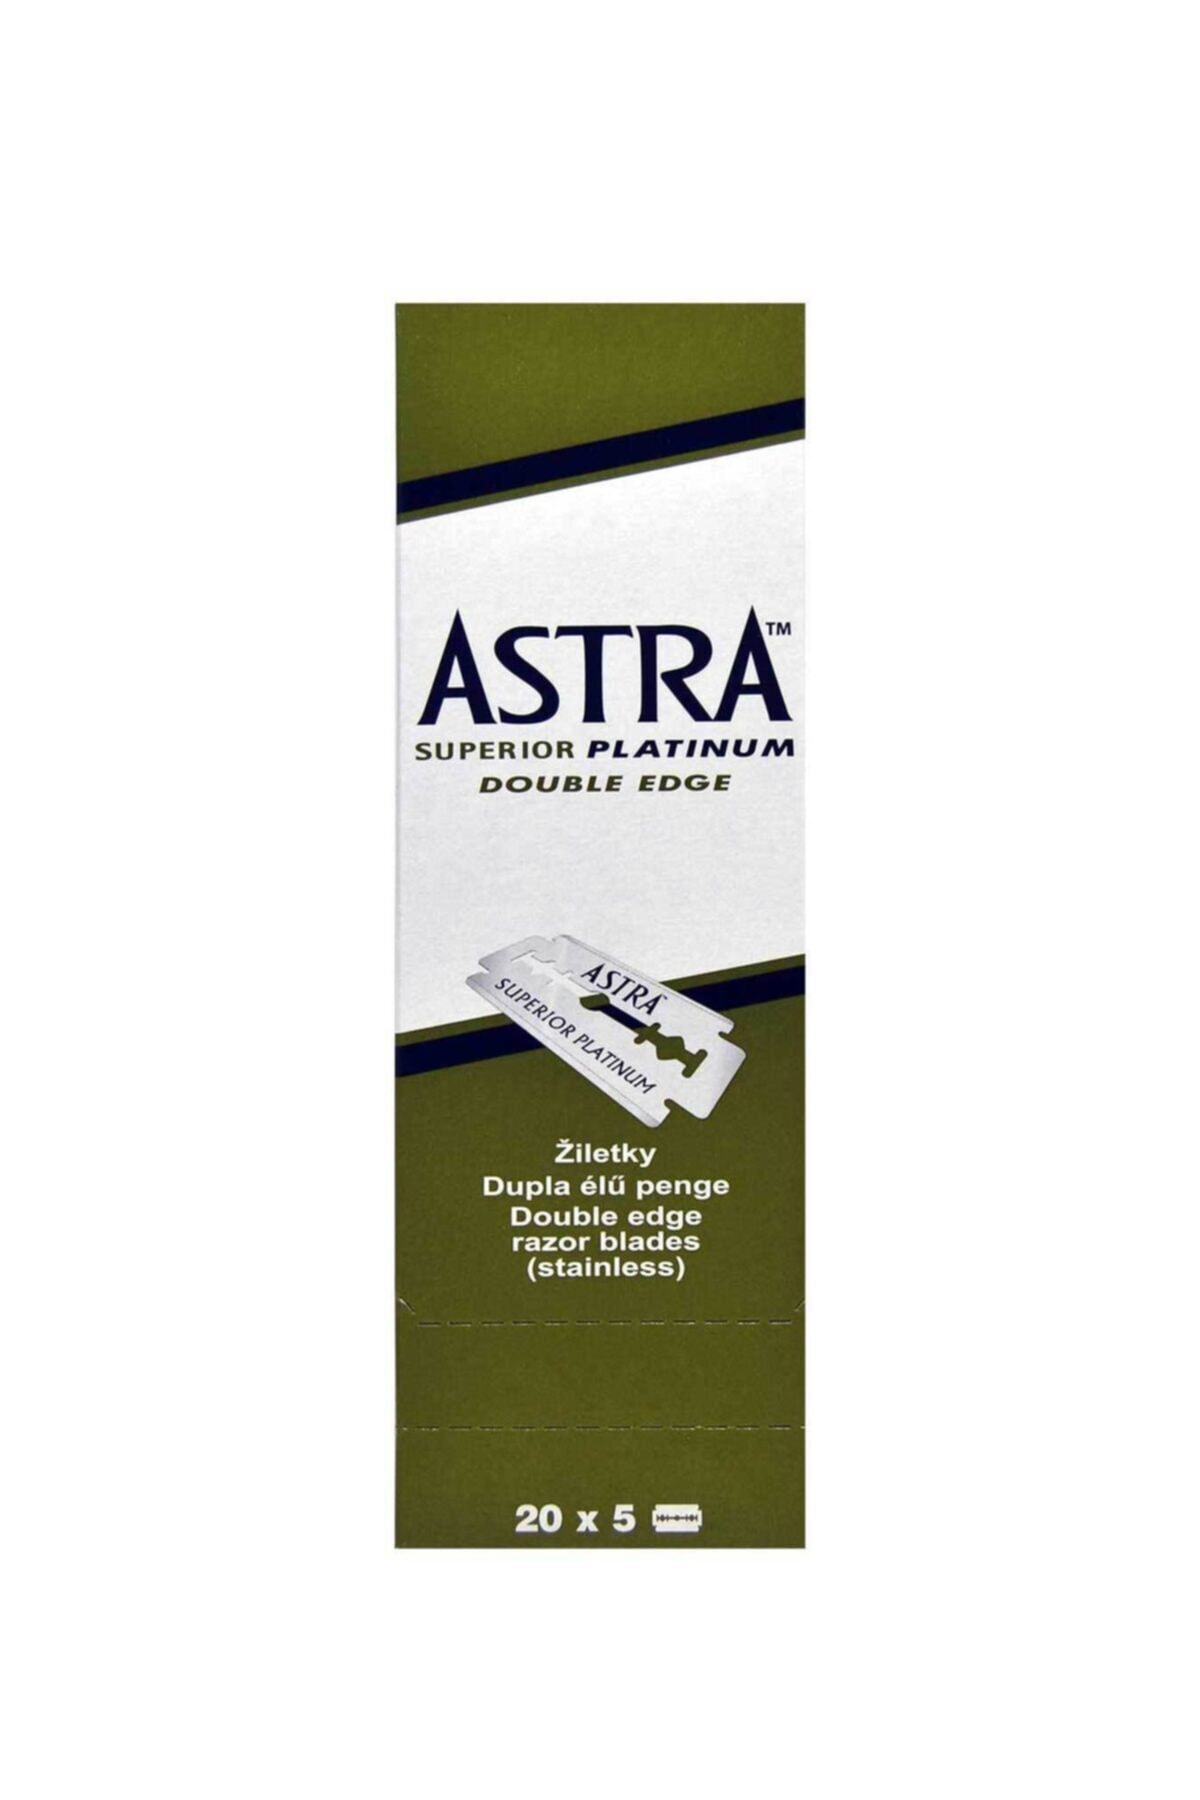 Astra Platinium Tıraş Jileti Çift Kenarlı Double Edge